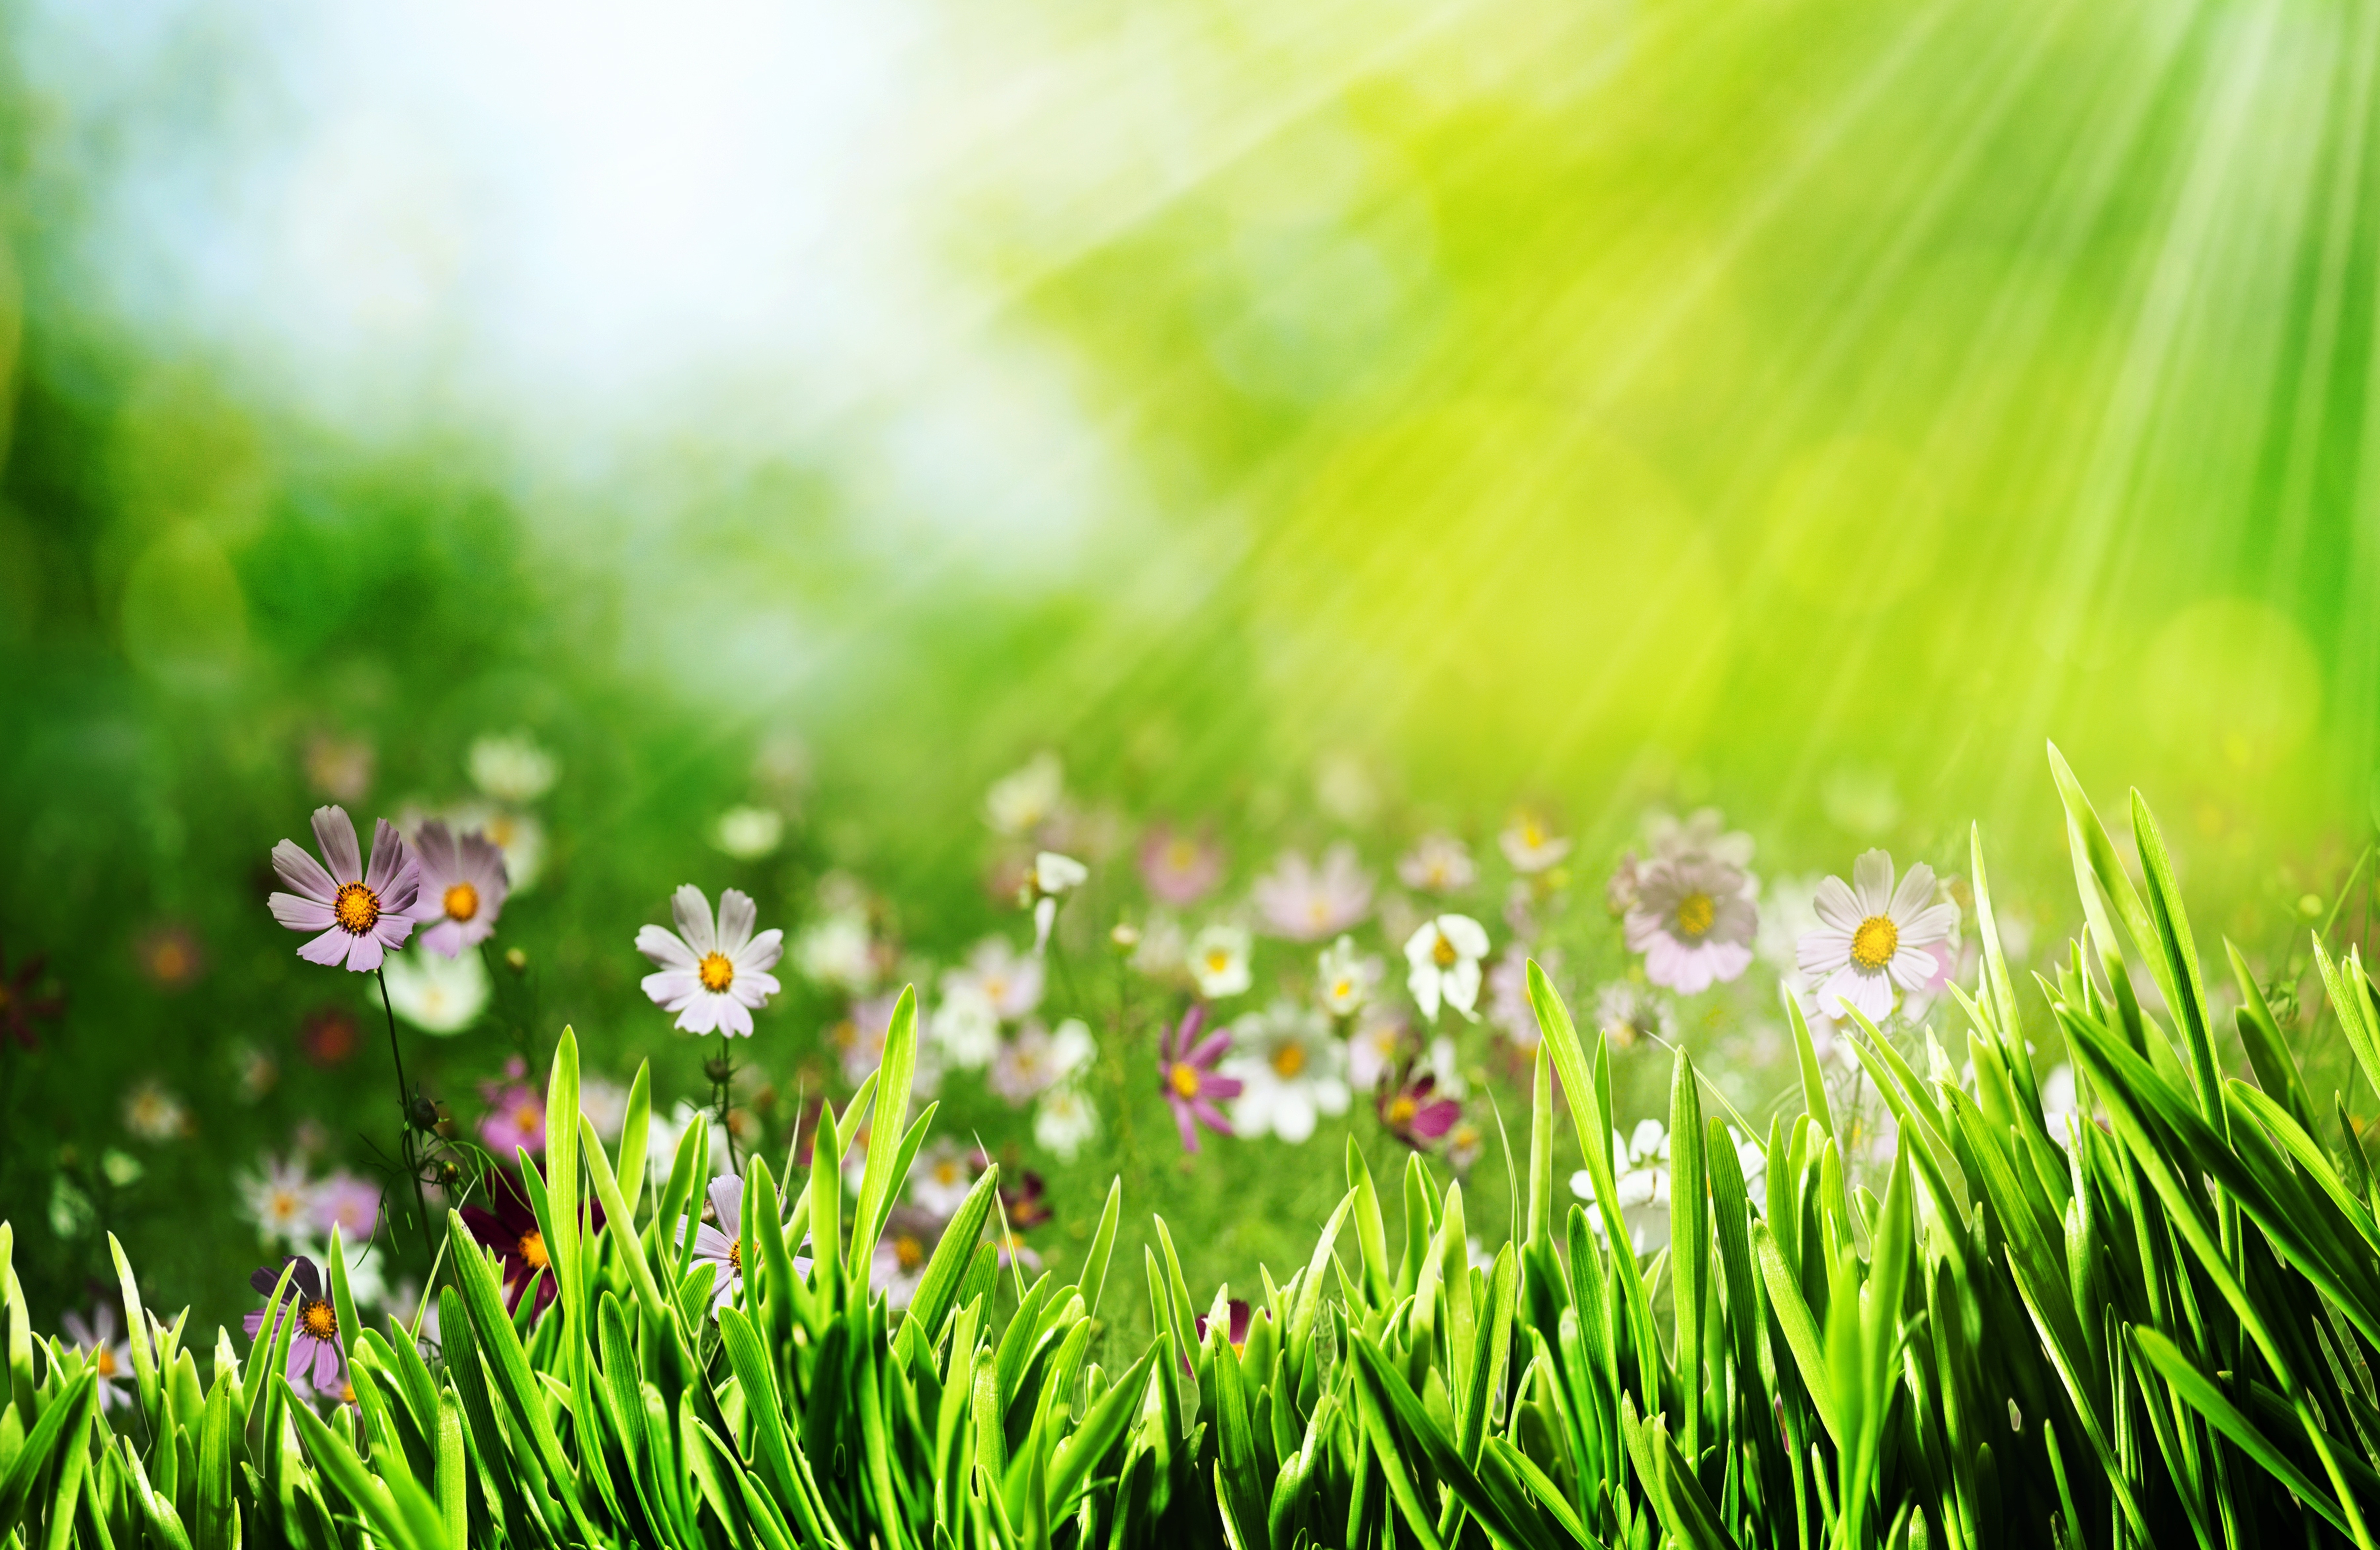 1 мая трава. Трава цветы. Летний фон. Солнечная Поляна с цветами. Зеленая трава с цветами.